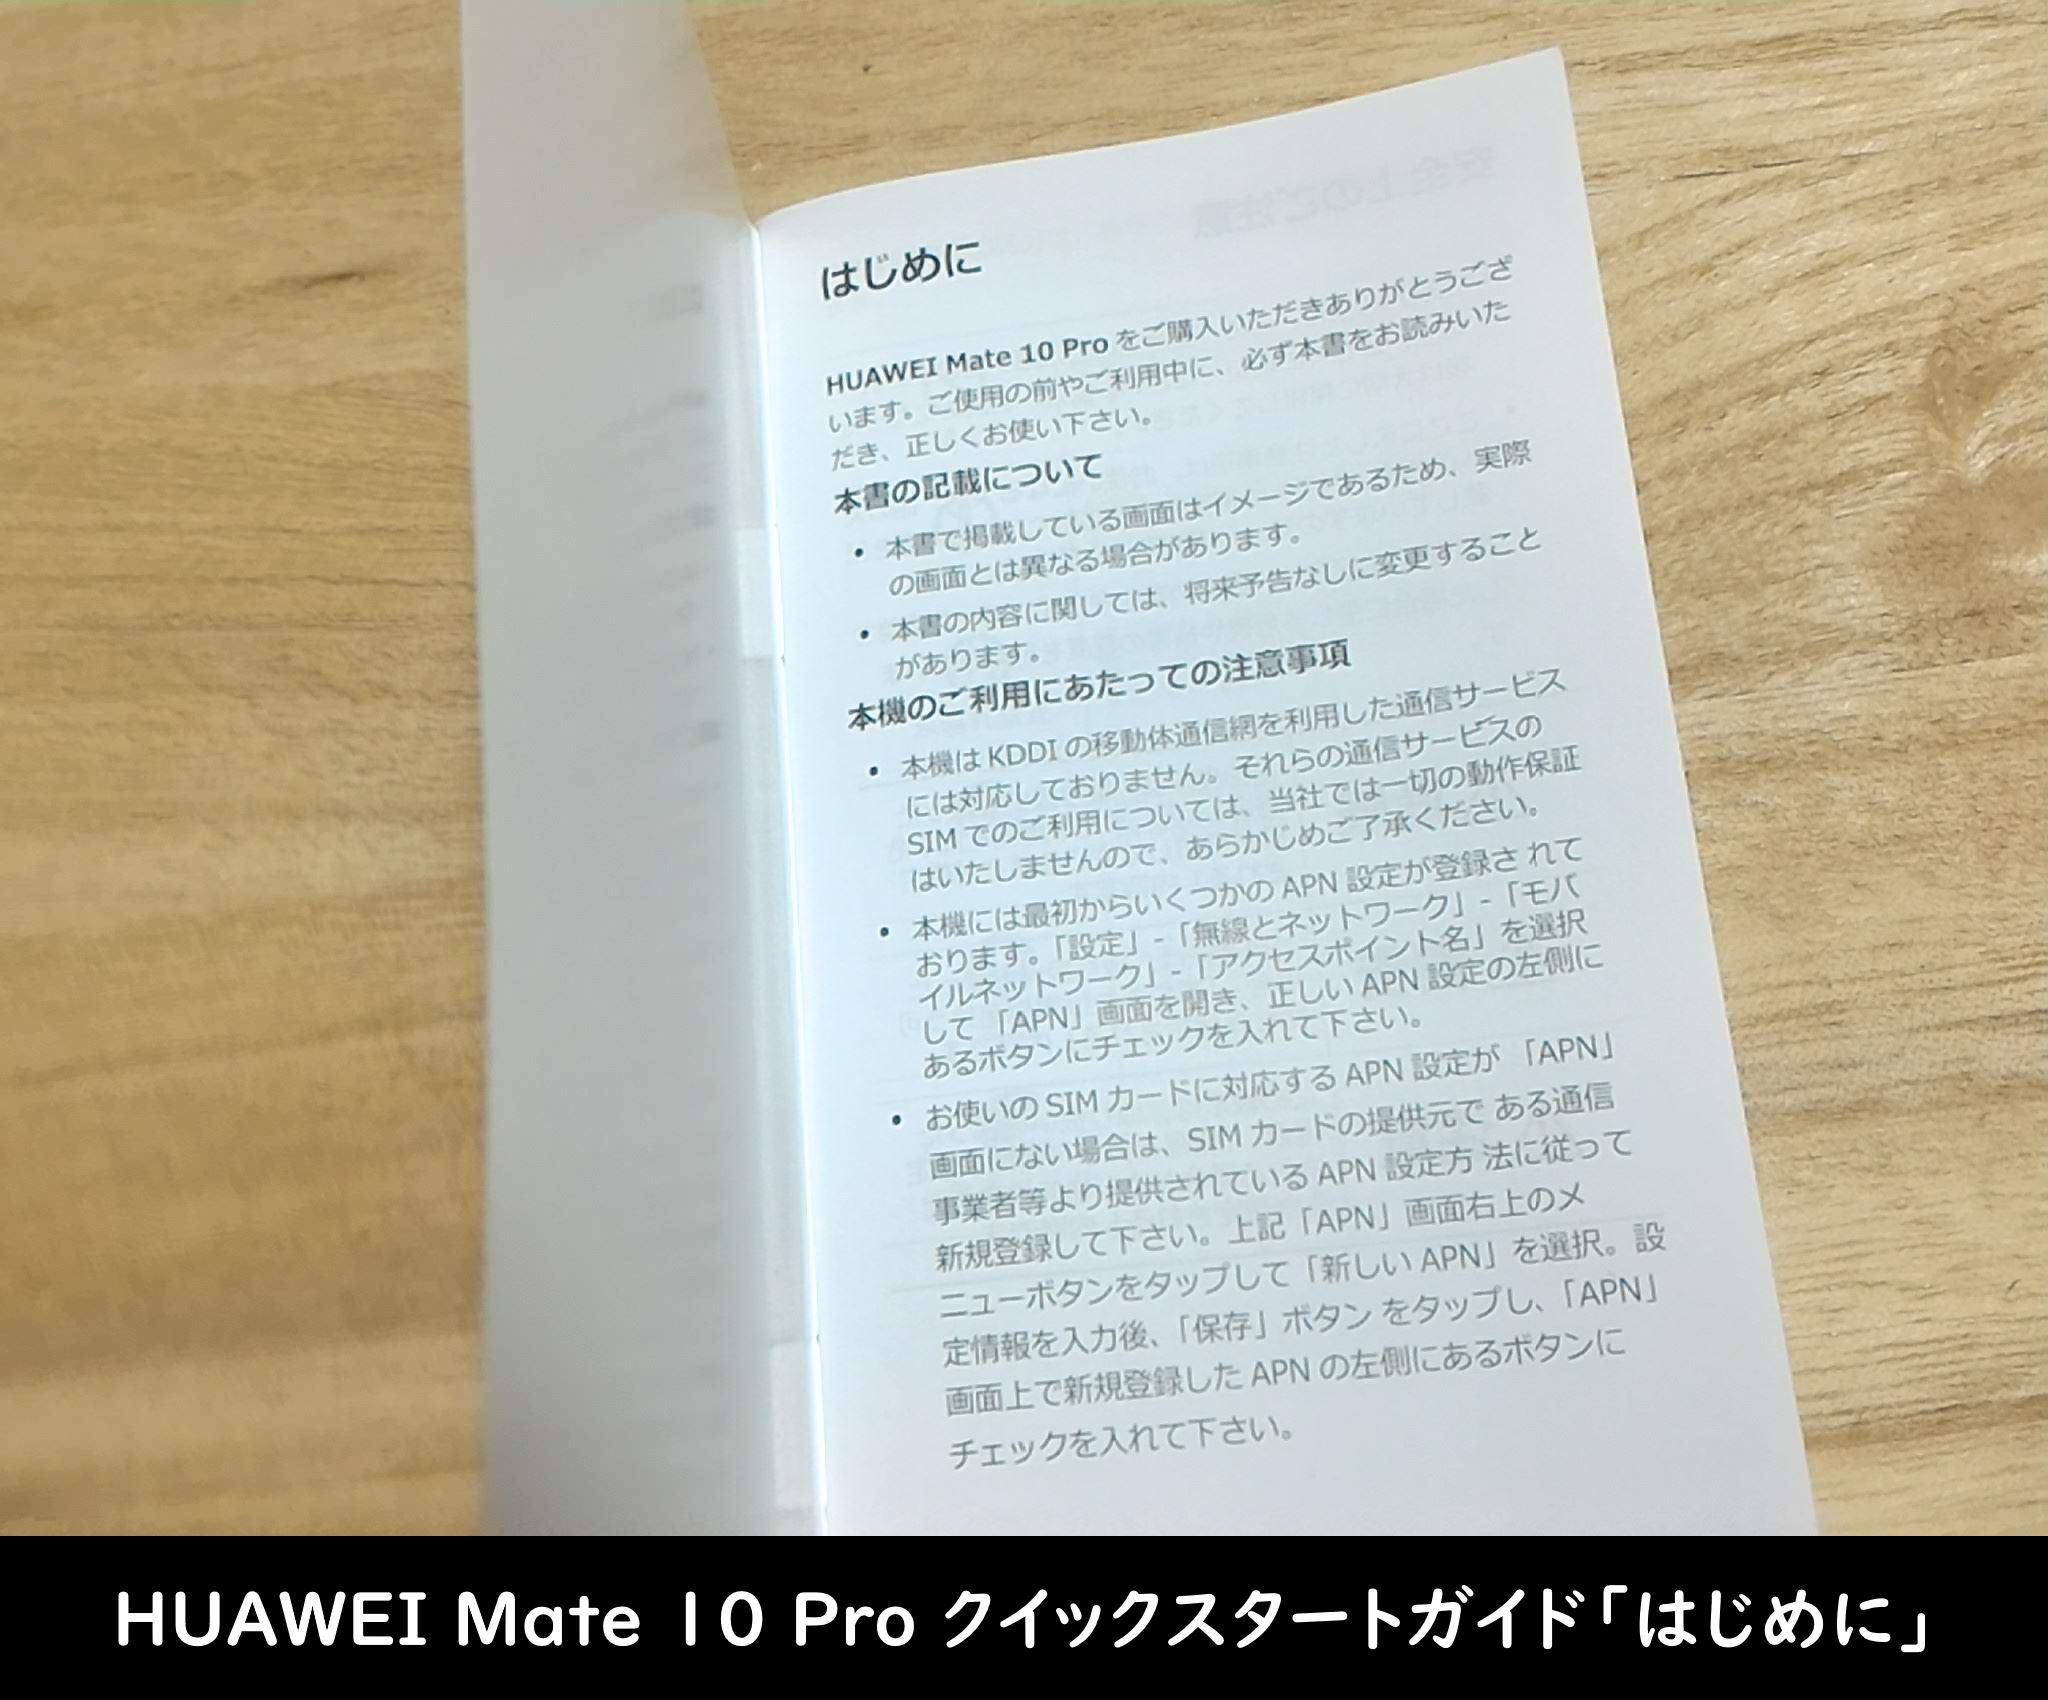 HUAWEI Mate 10 Pro クイックスタートガイド「はじめに」